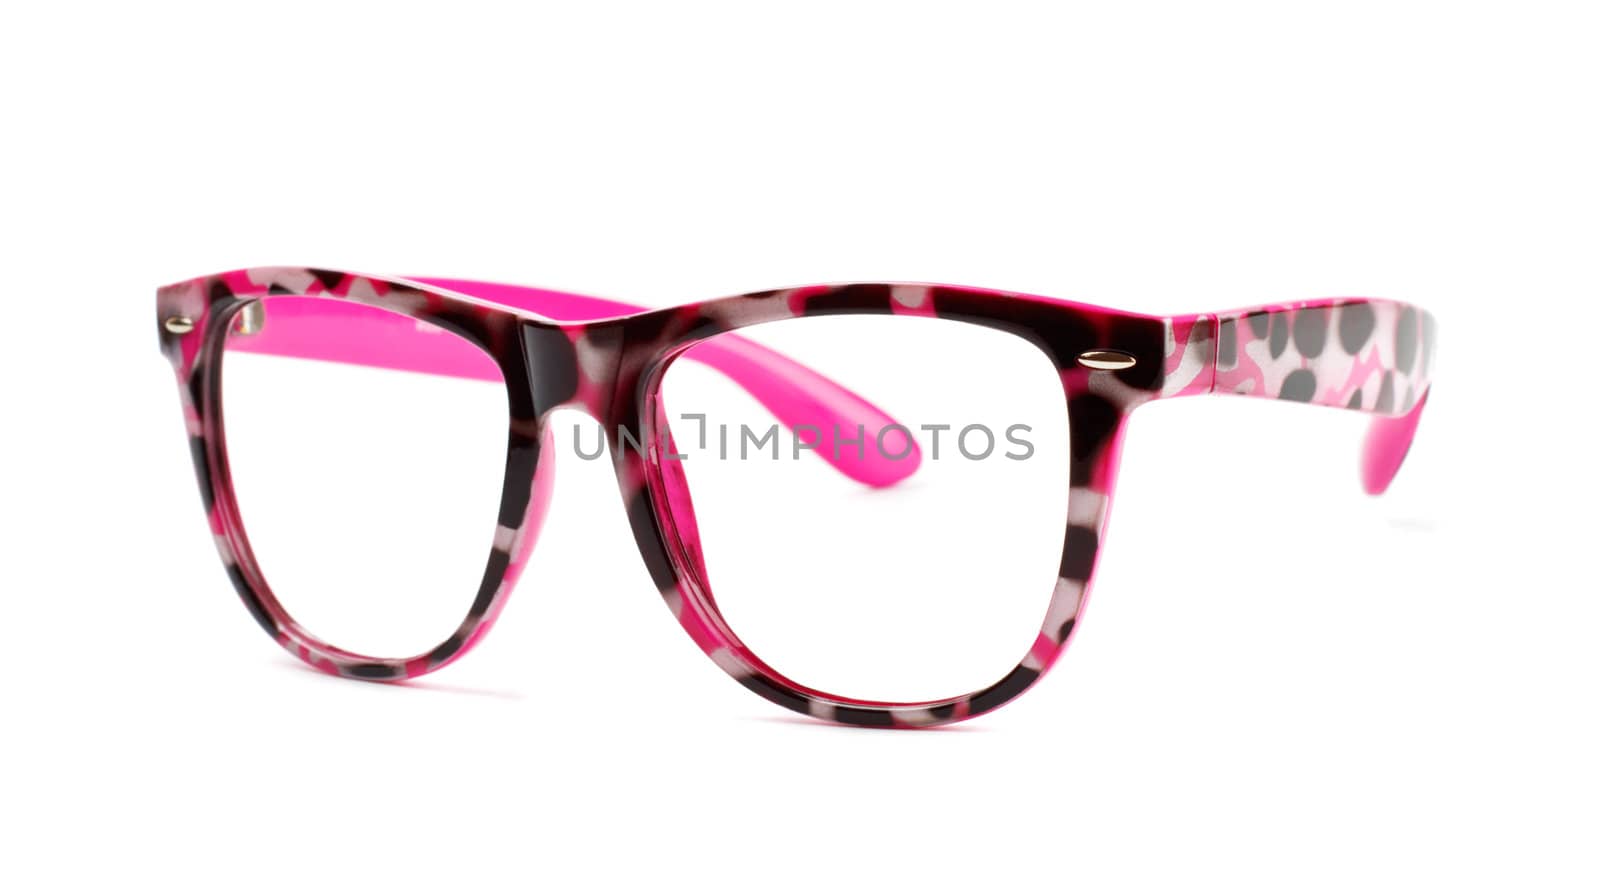 funny pink eyeglasses isolated on white background